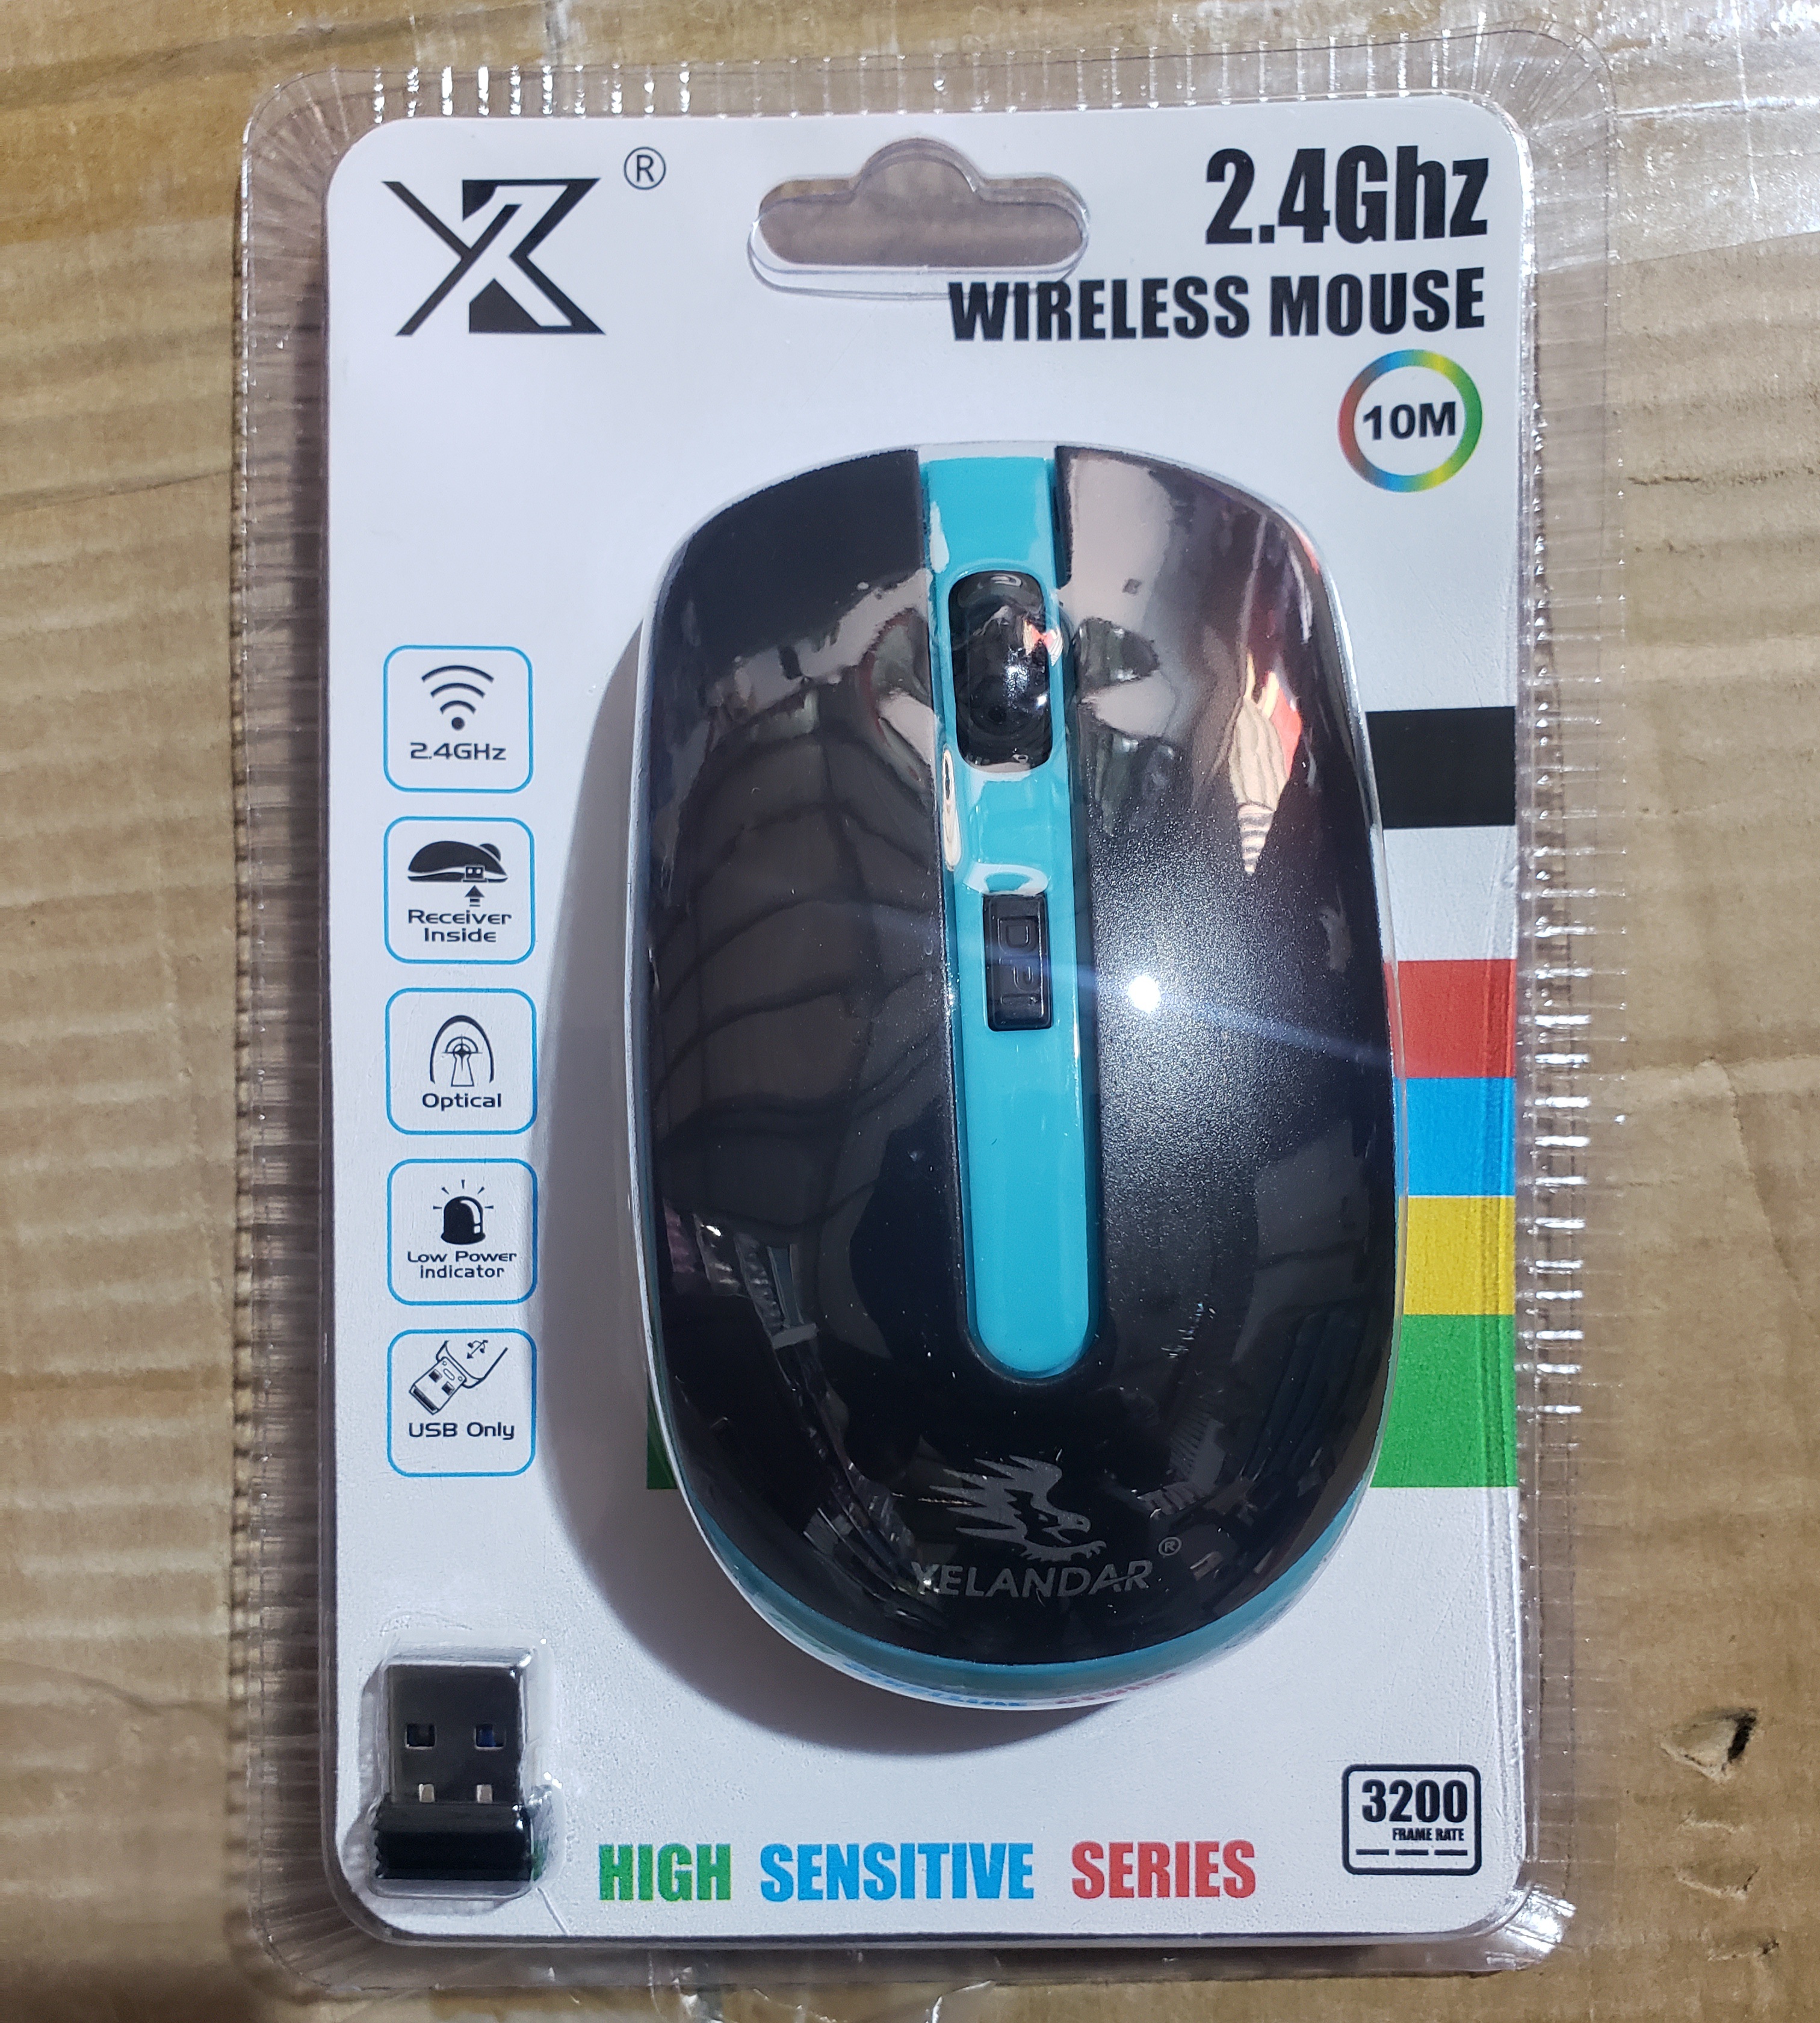 Wireless Mouse Jiexin 2.4GHZ – Green